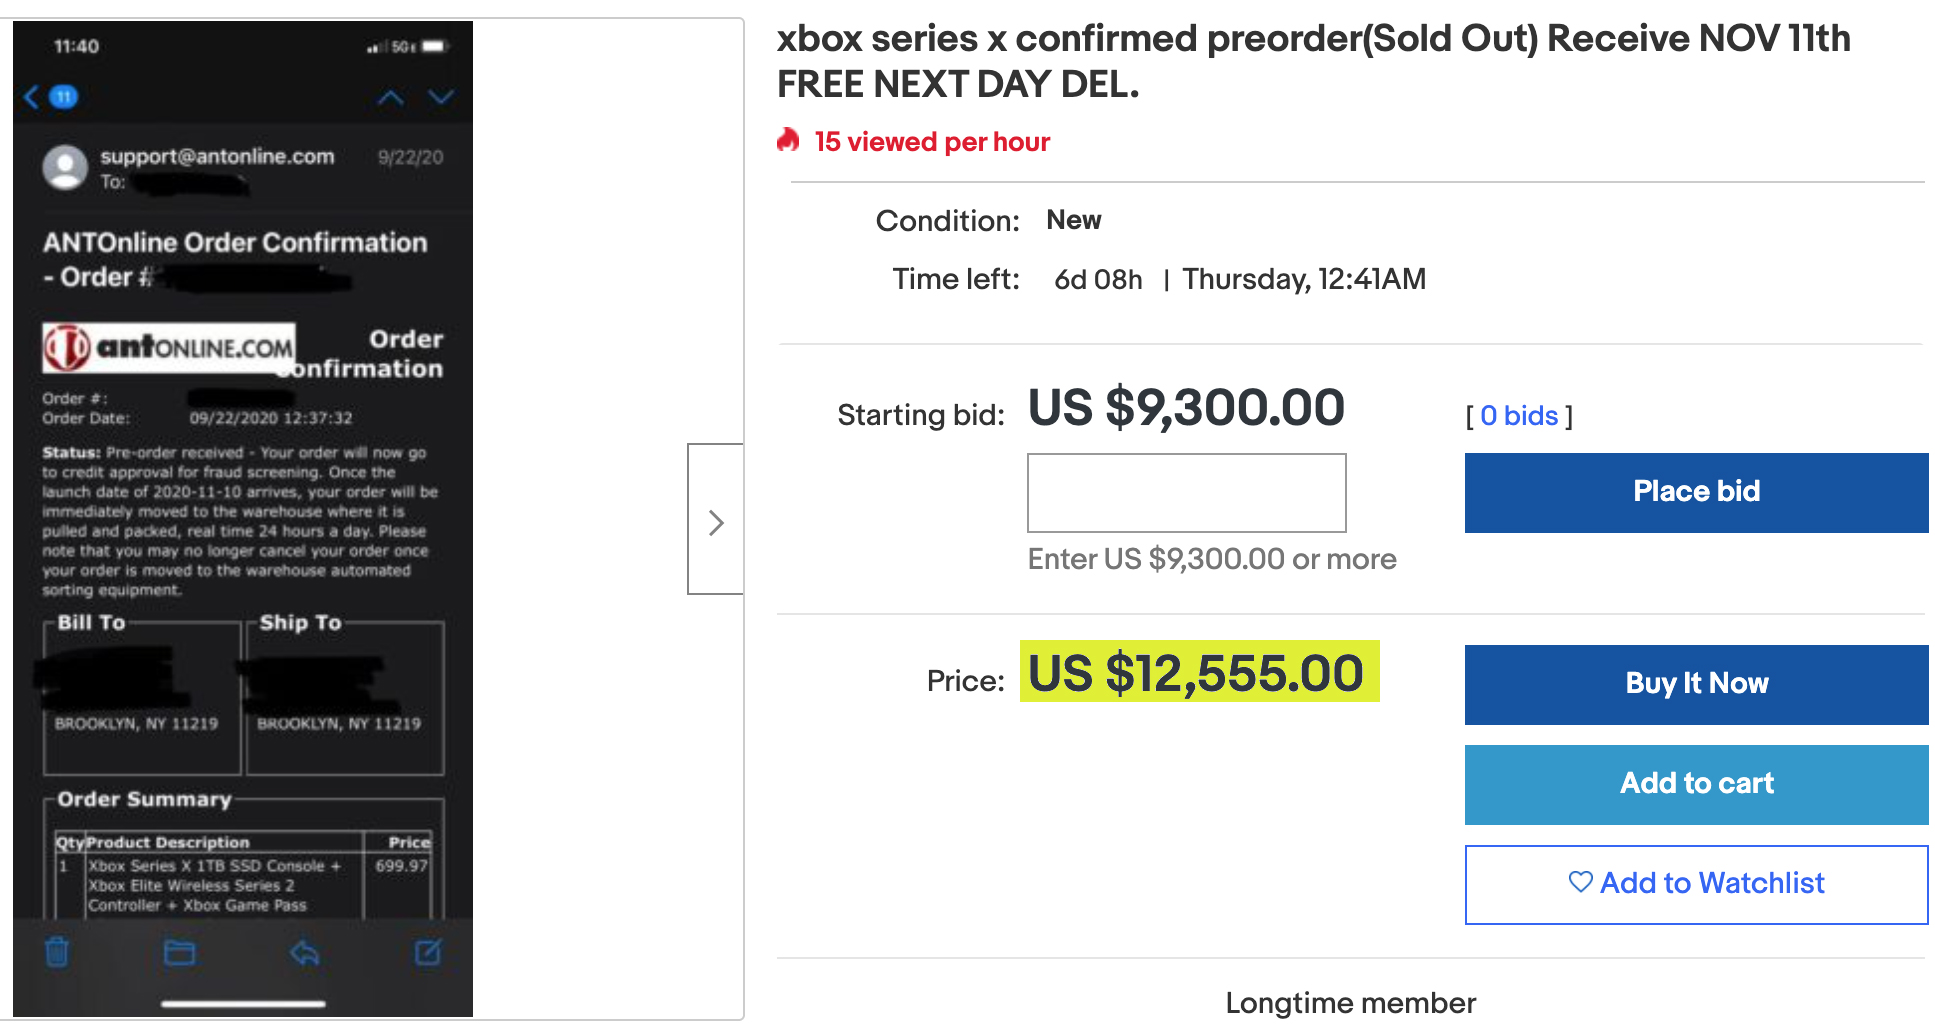 xbox series x ebay listing $12,555.00